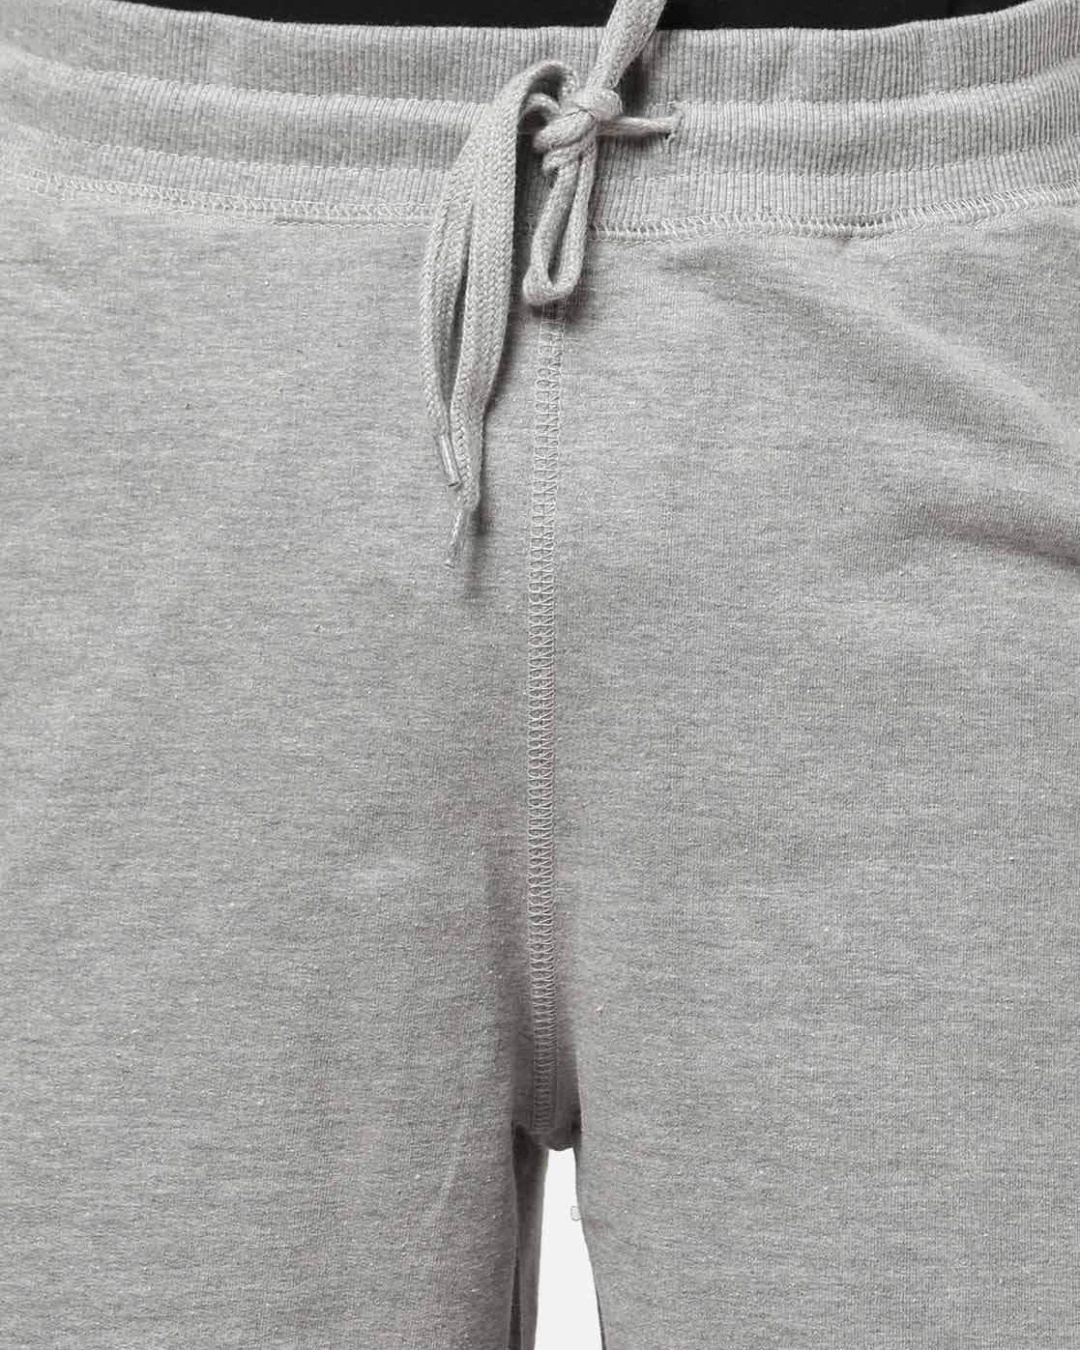 Buy Men's Grey Casual Shorts for Men Grey Online at Bewakoof